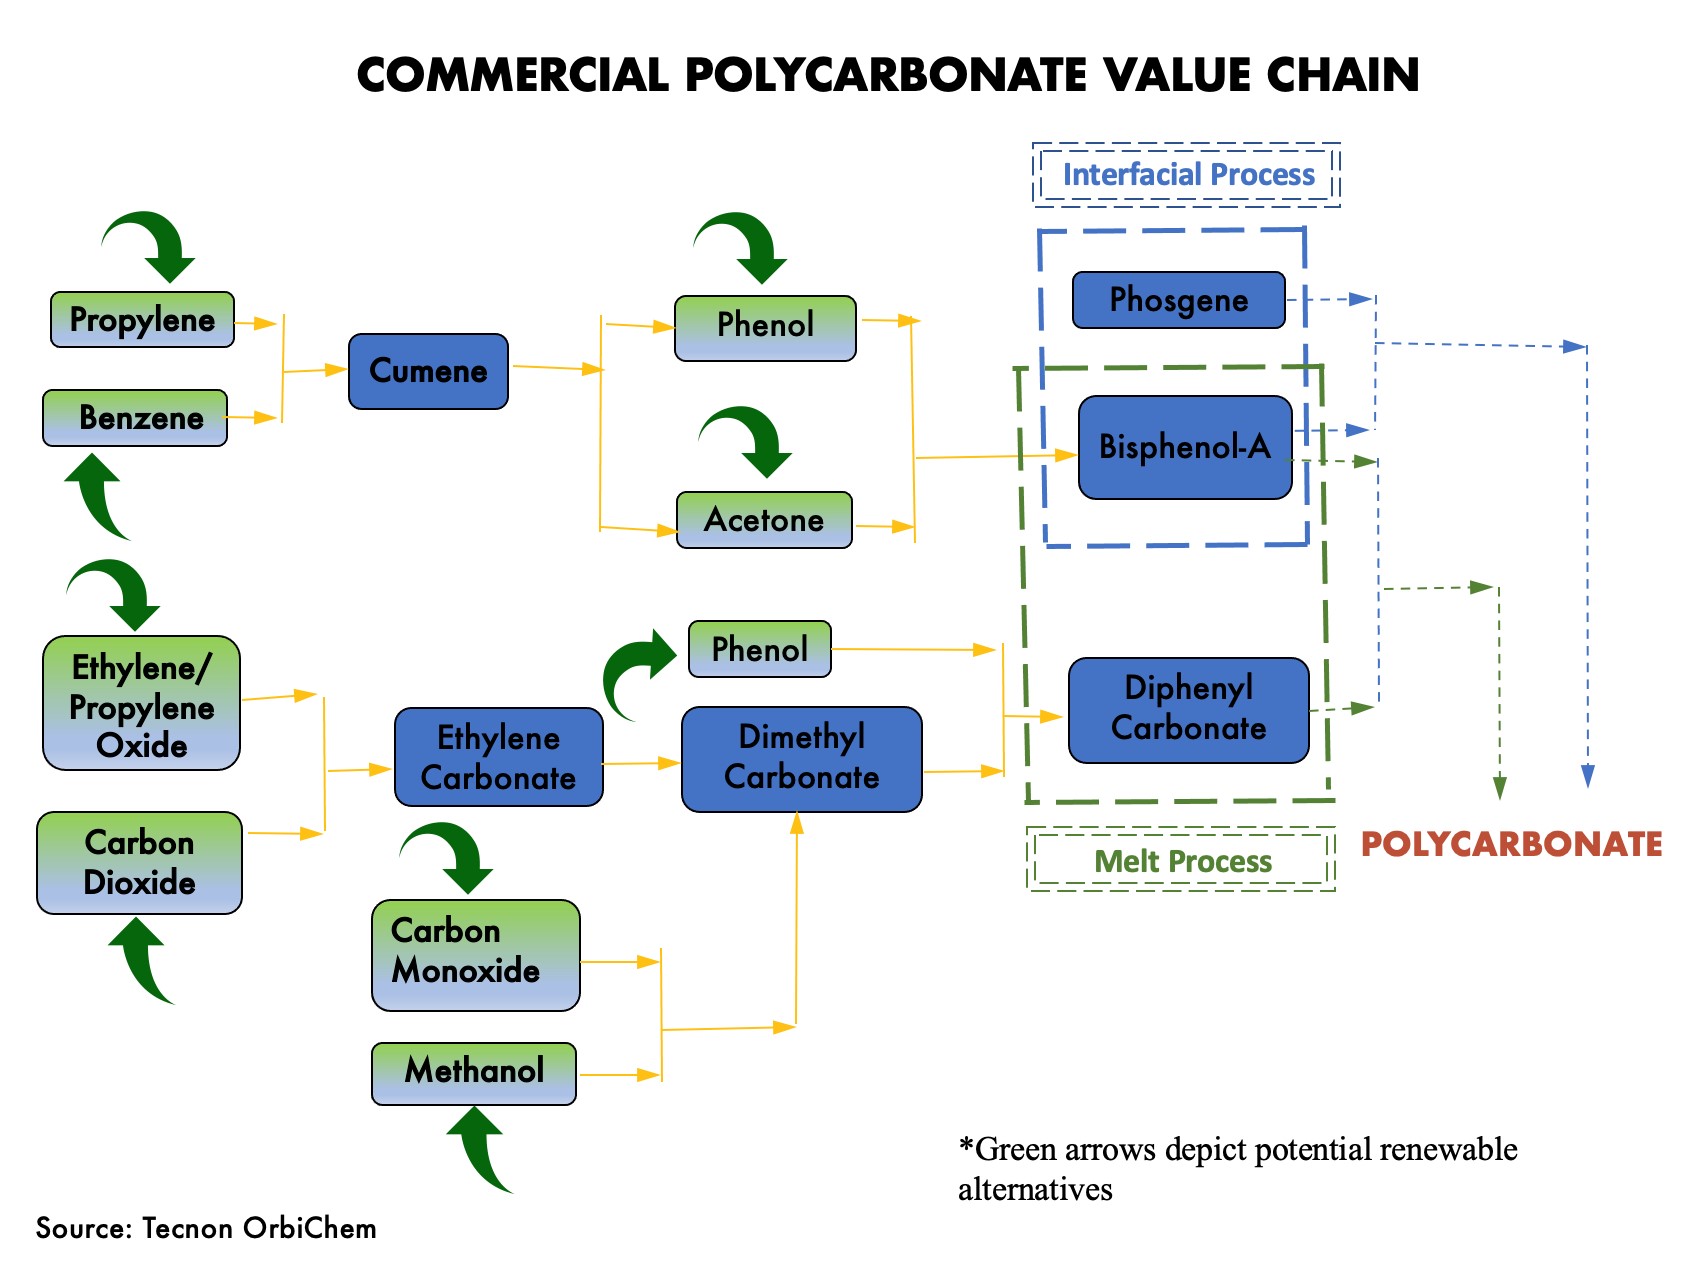 Developing Renewable Polycarbonates: A Balancing Act